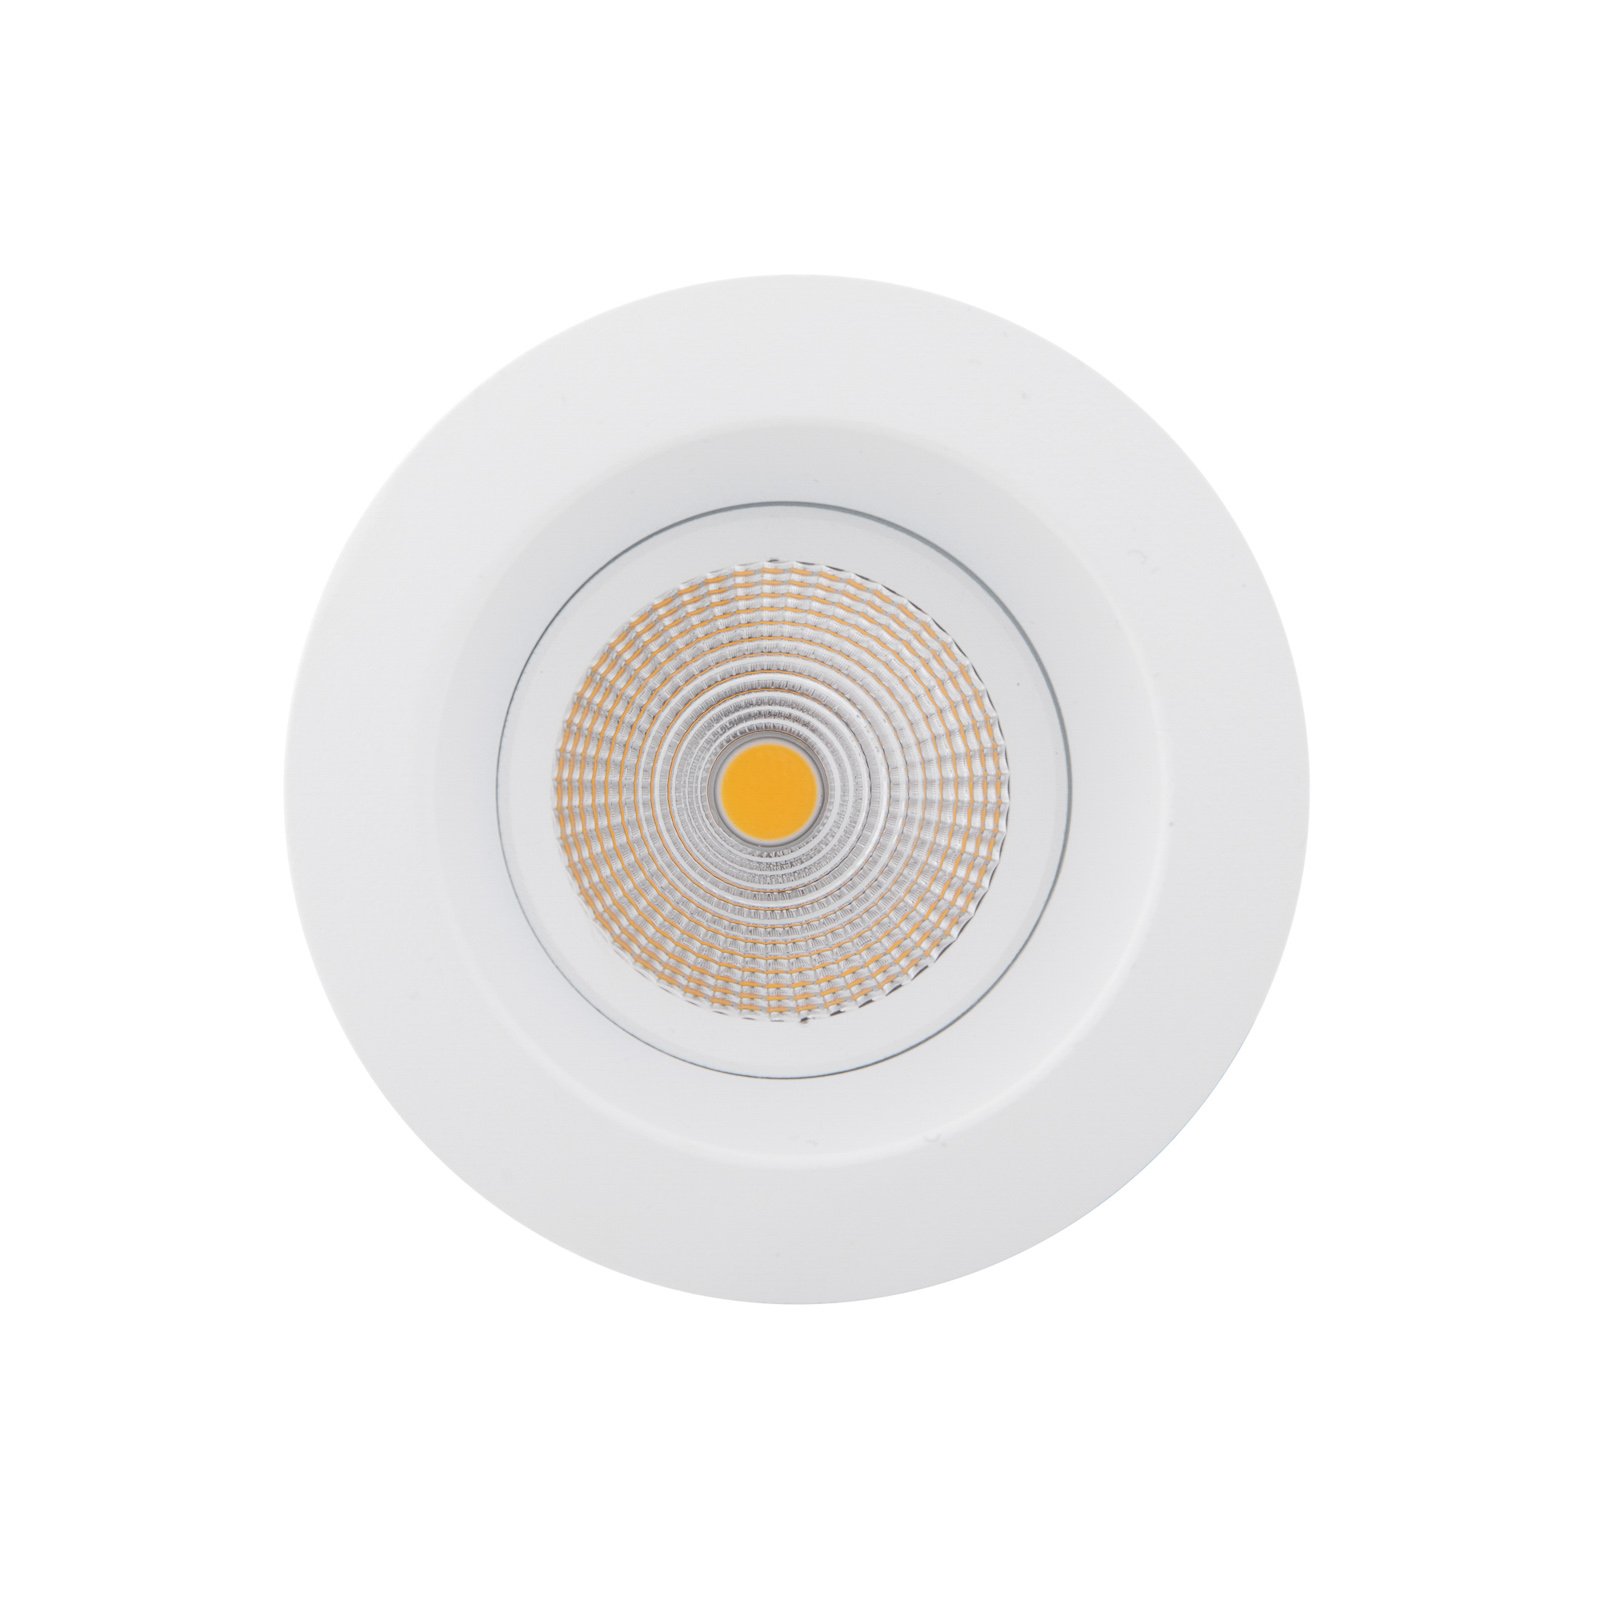 SLC One Soft LED downlight dim-to-warm white